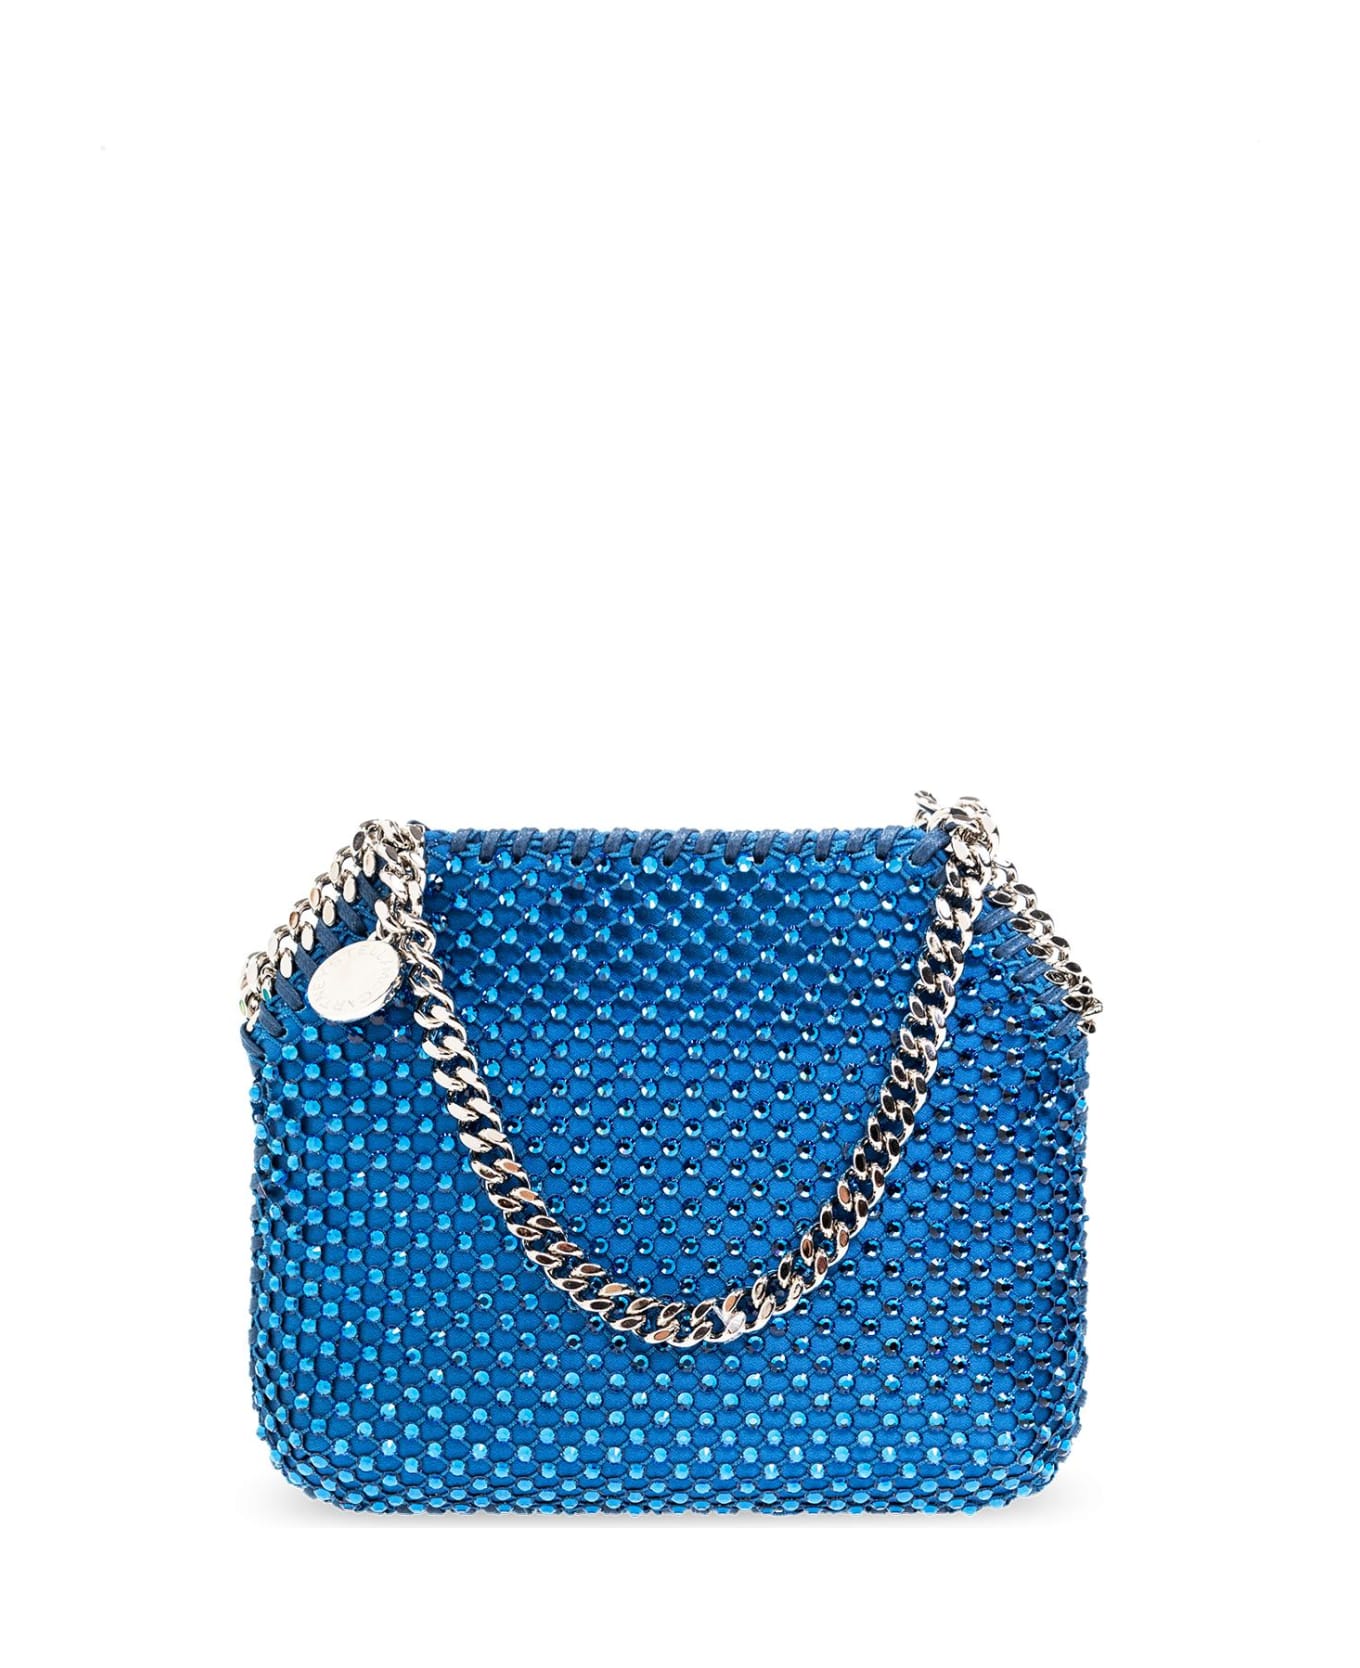 Stella McCartney 'falabella Mini' Shoulder Bag - Cobalt blue